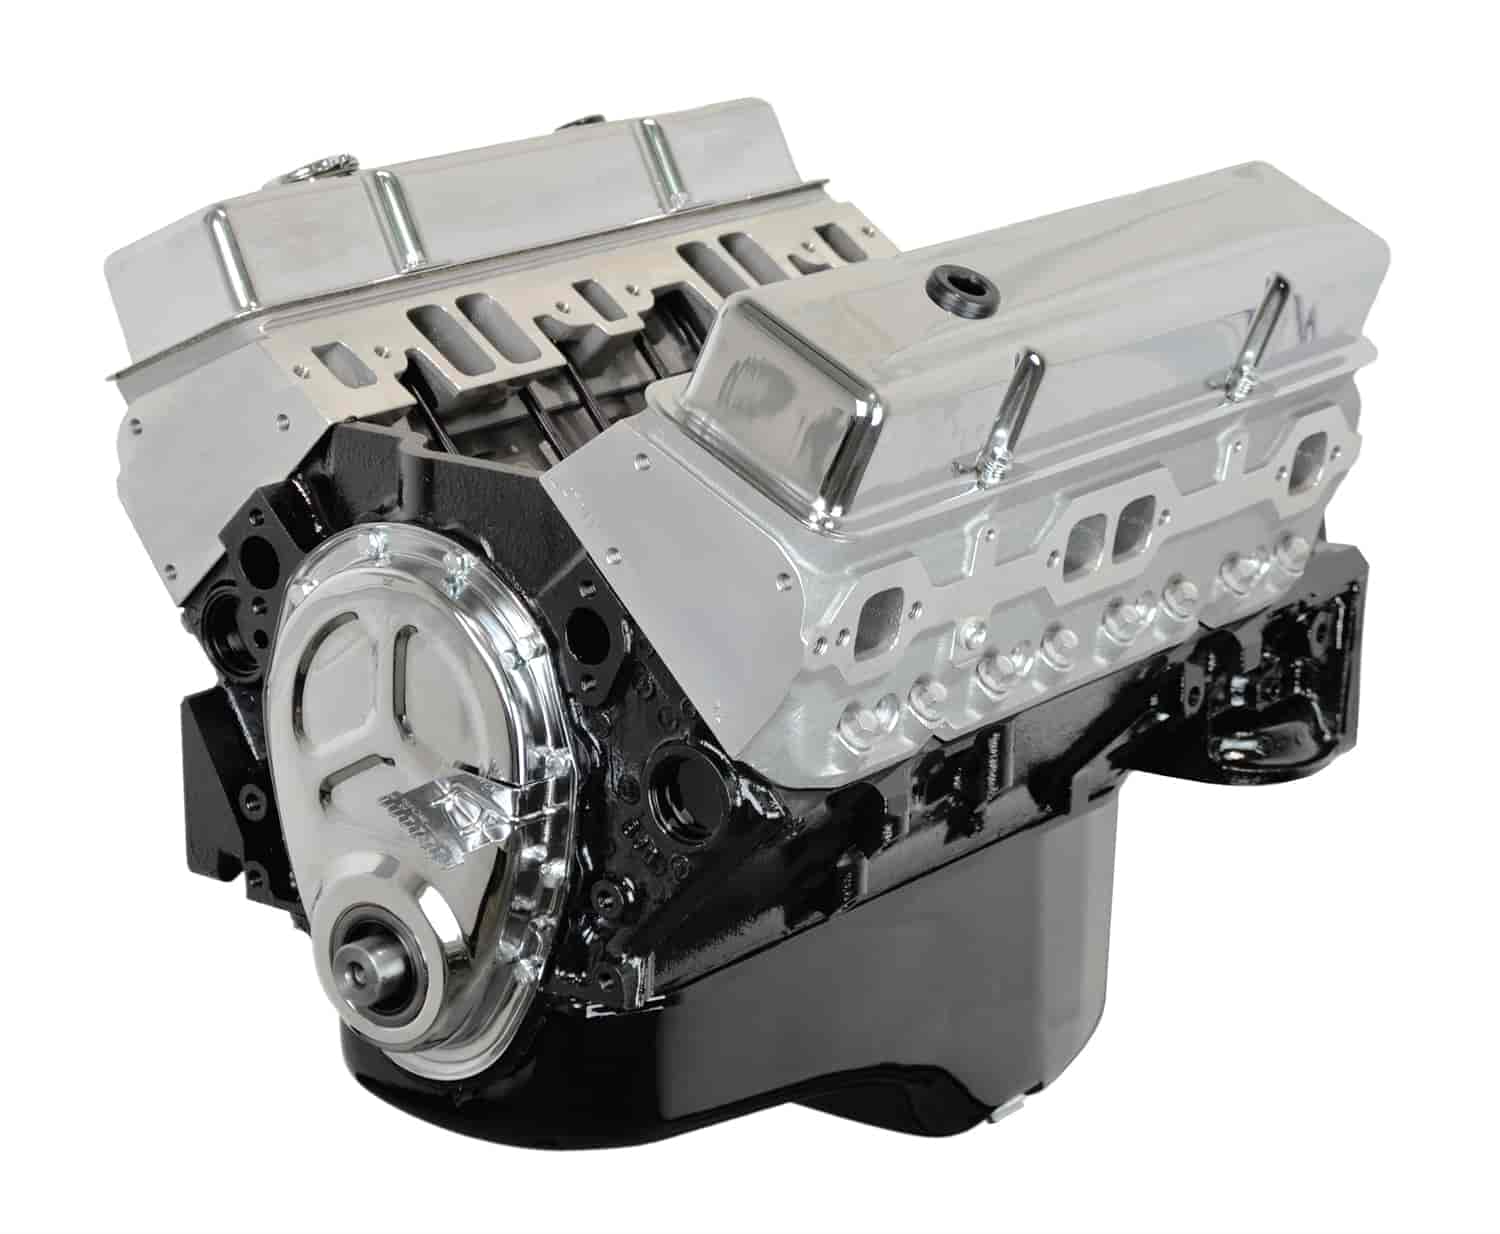 High Performance Crate Engine Small Block Chevy 383ci / 435HP / 475TQ